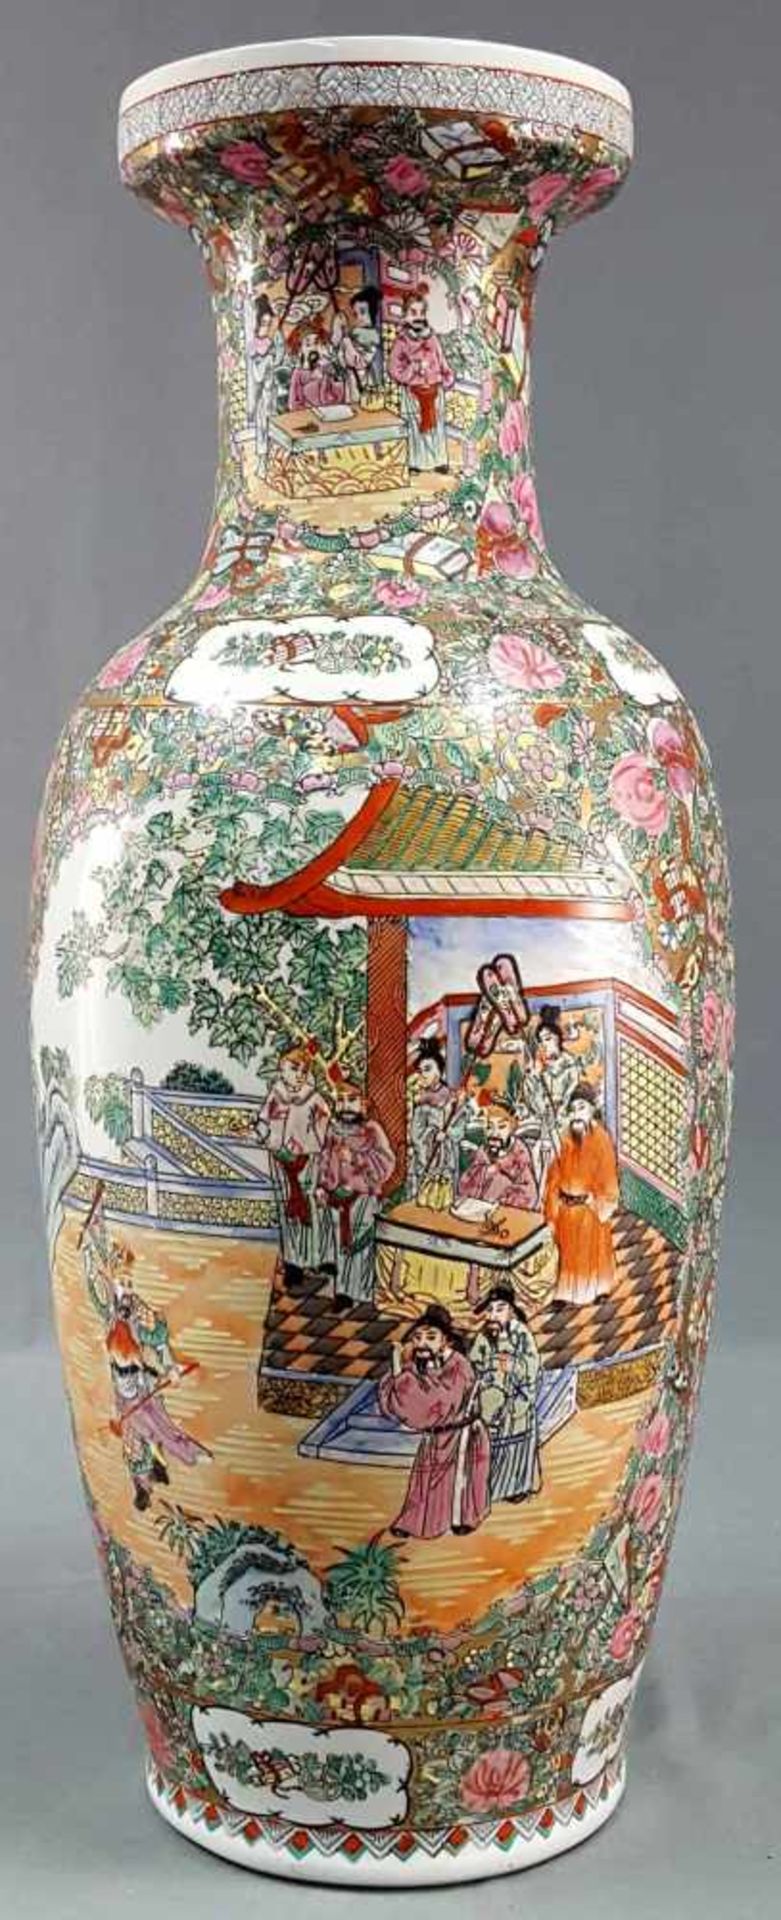 Vase proably China with 6-character mark.